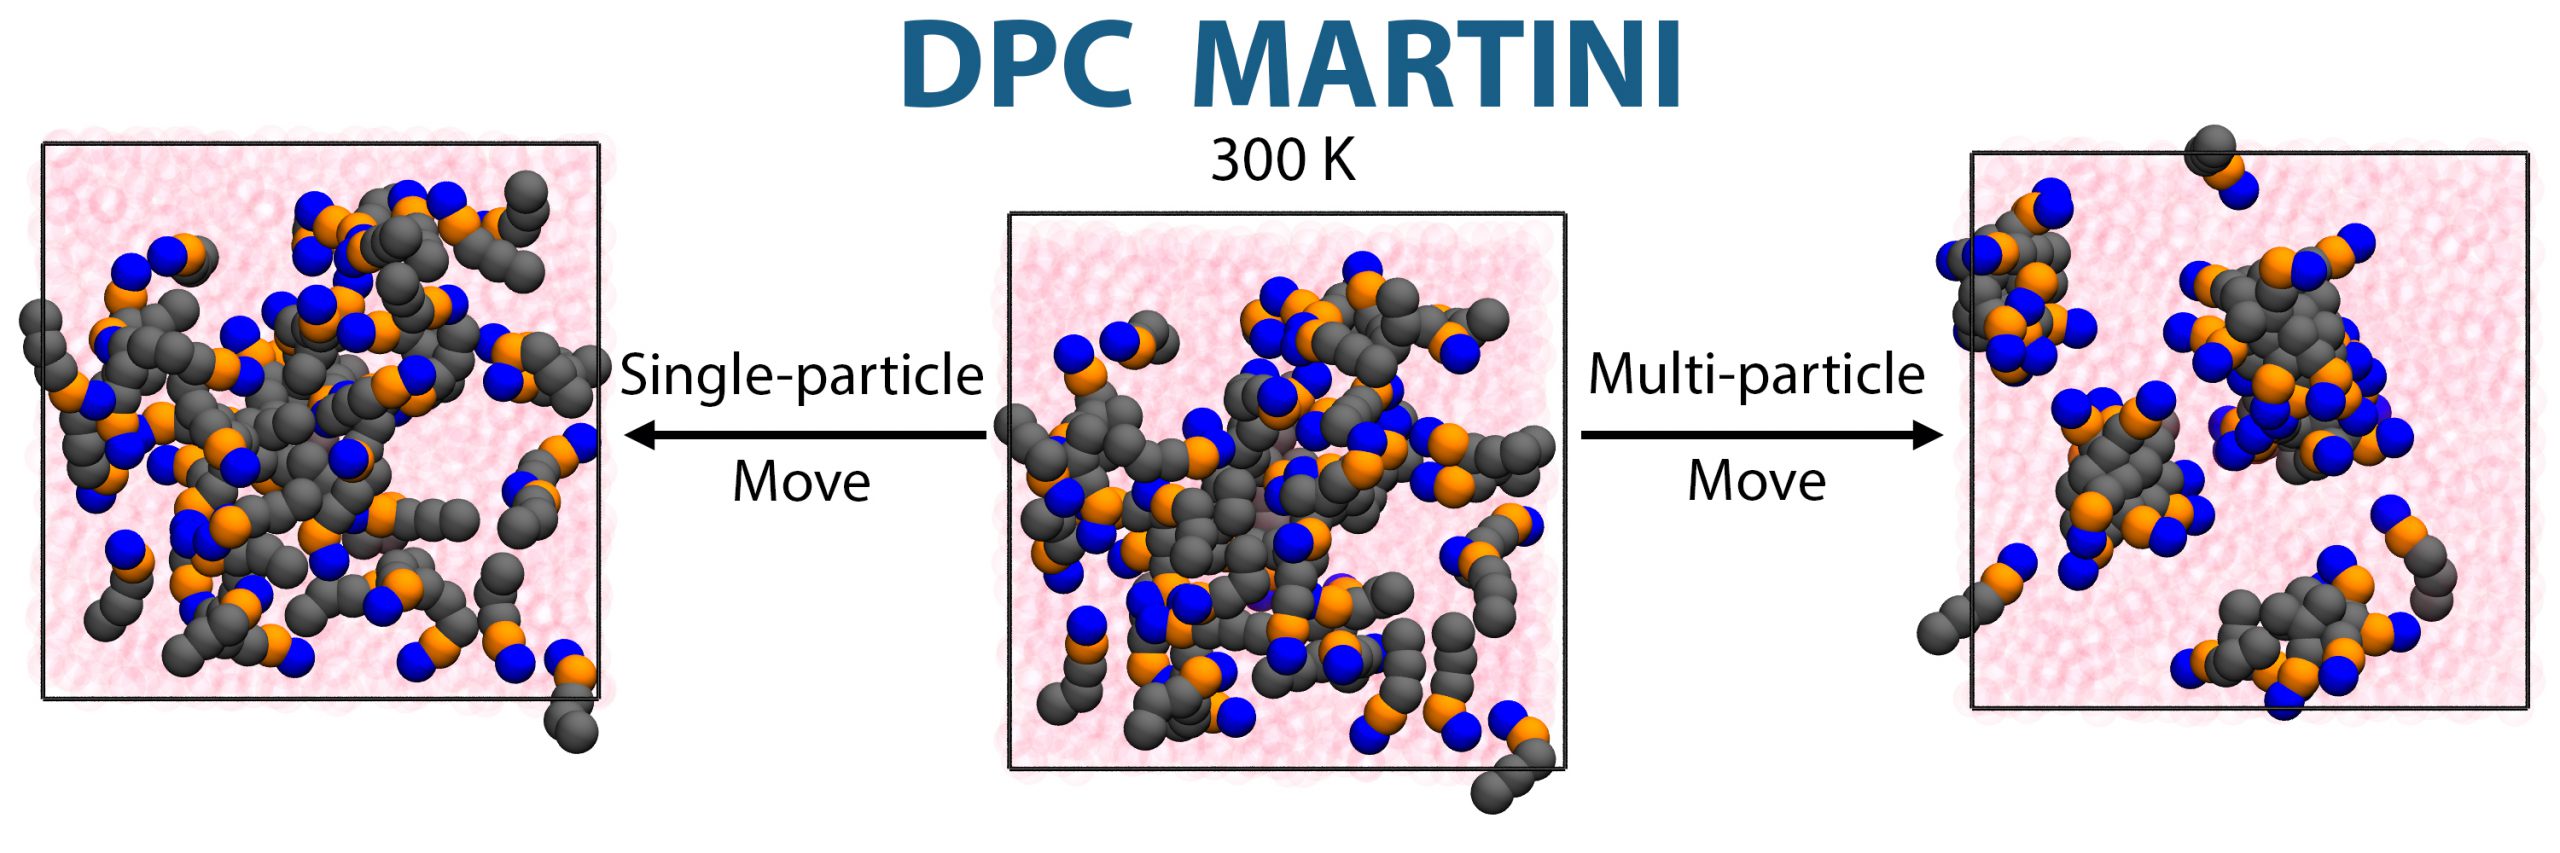 DPC Martini